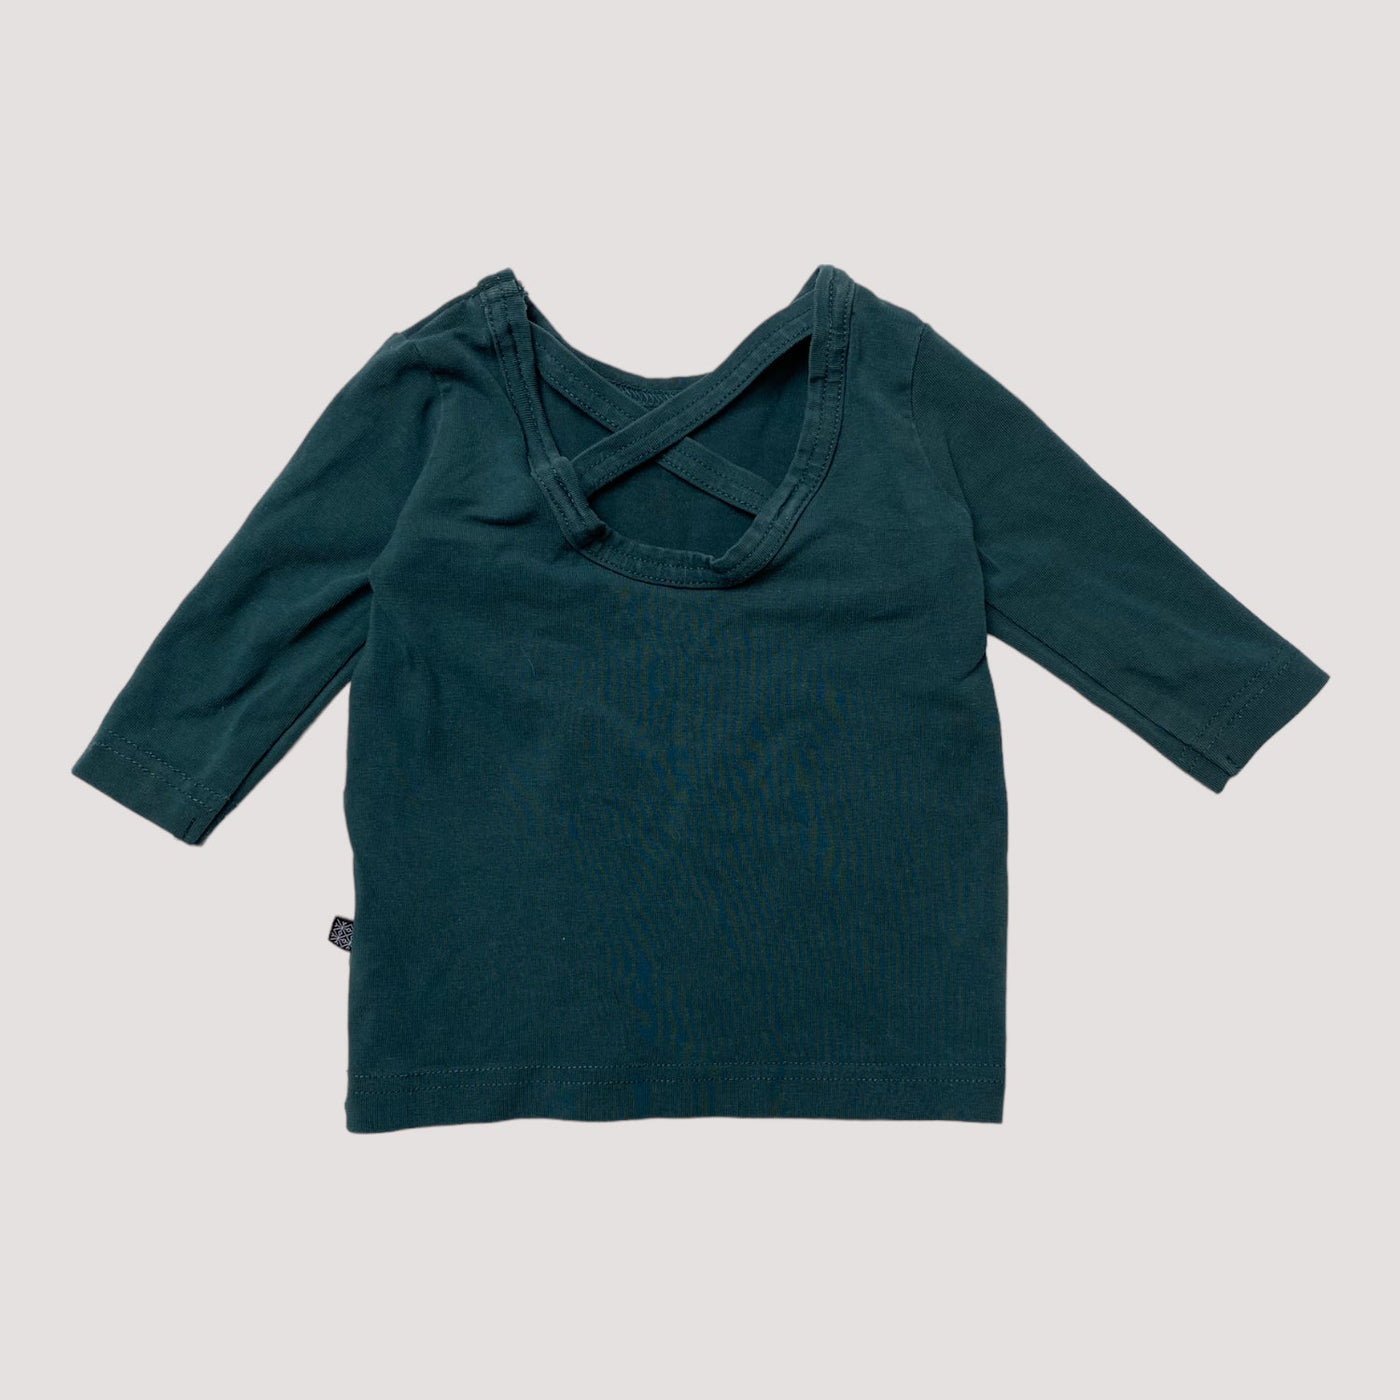 Kaiko cross shirt, green | 62/68cm